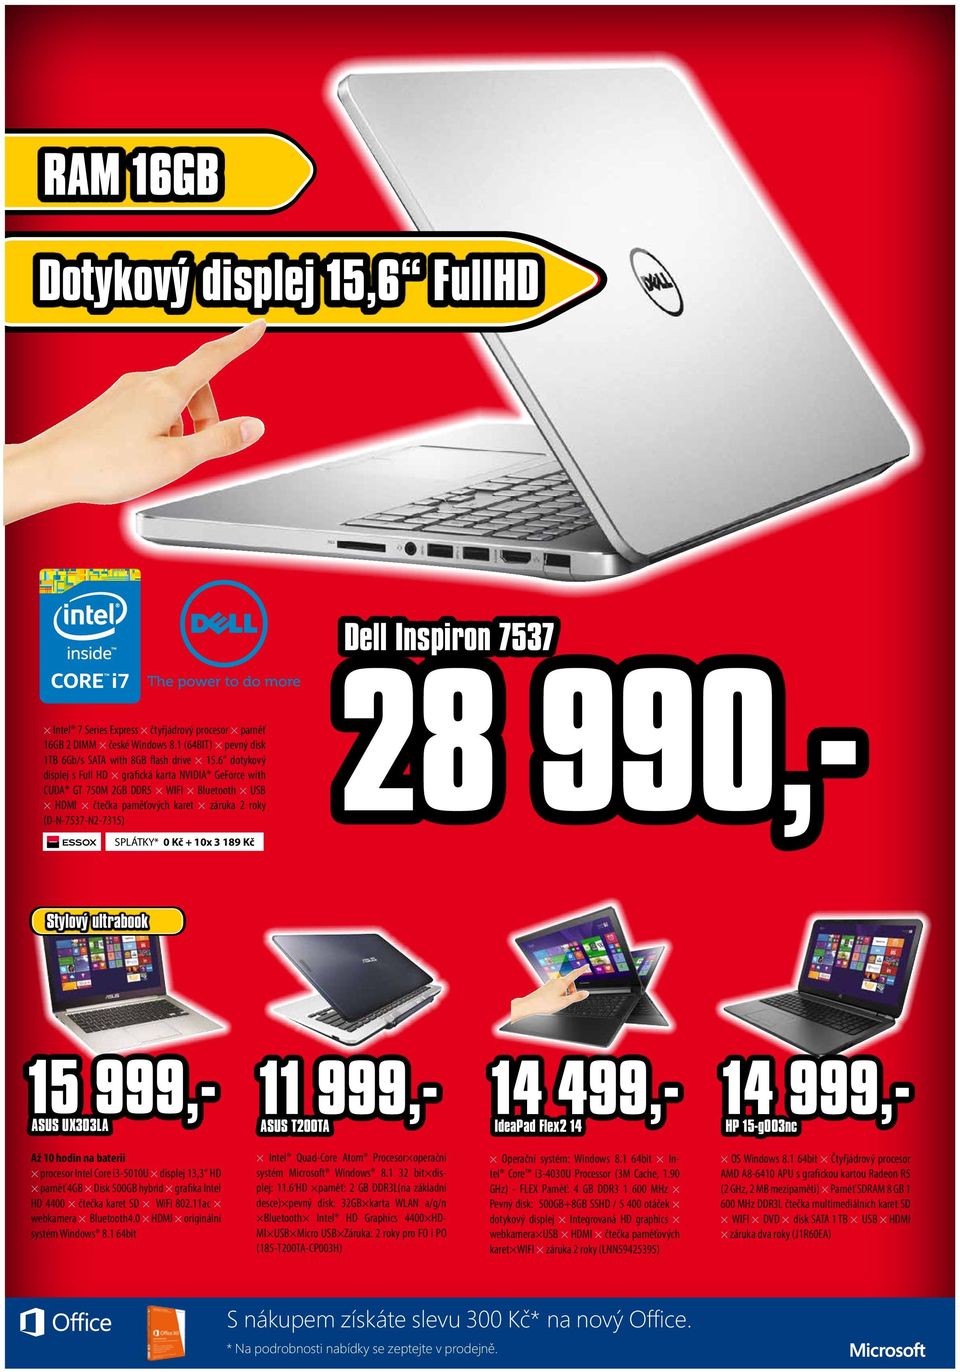 Dell Inspiron 7537 28 990,- Stylový ultrabook 15 999,- ASUS UX303LA 11 999,- ASUS T200TA 14 499,- IdeaPad Flex2 14 14 999,- HP 15-g003nc Až 10 hodin na baterii procesor Intel Core i3-5010u displej